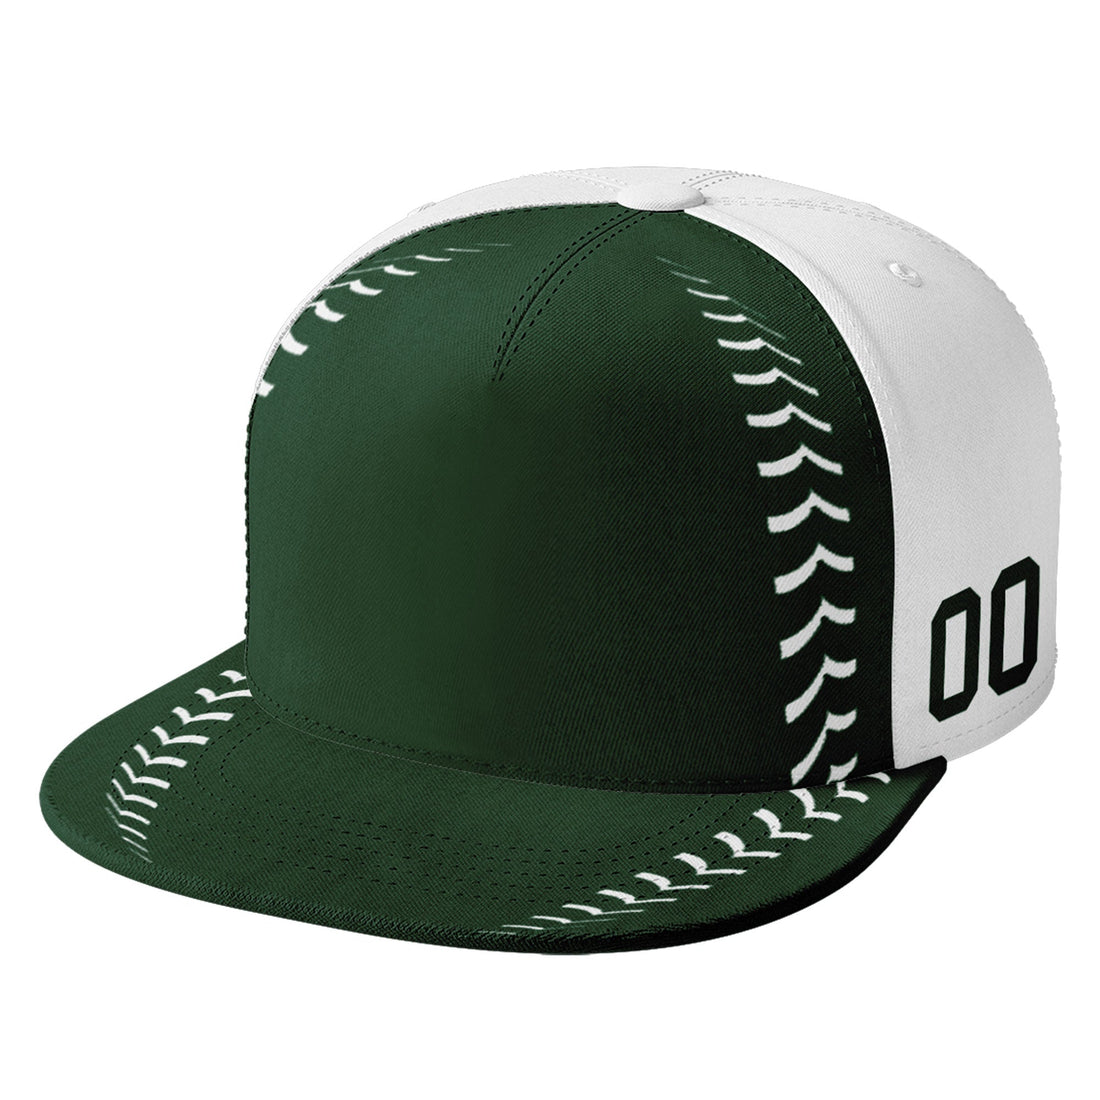 Custom Sport Design Hat Stitched Adjustable Snapback Personalized Baseball Cap PR067B-bd0b00d9-a7